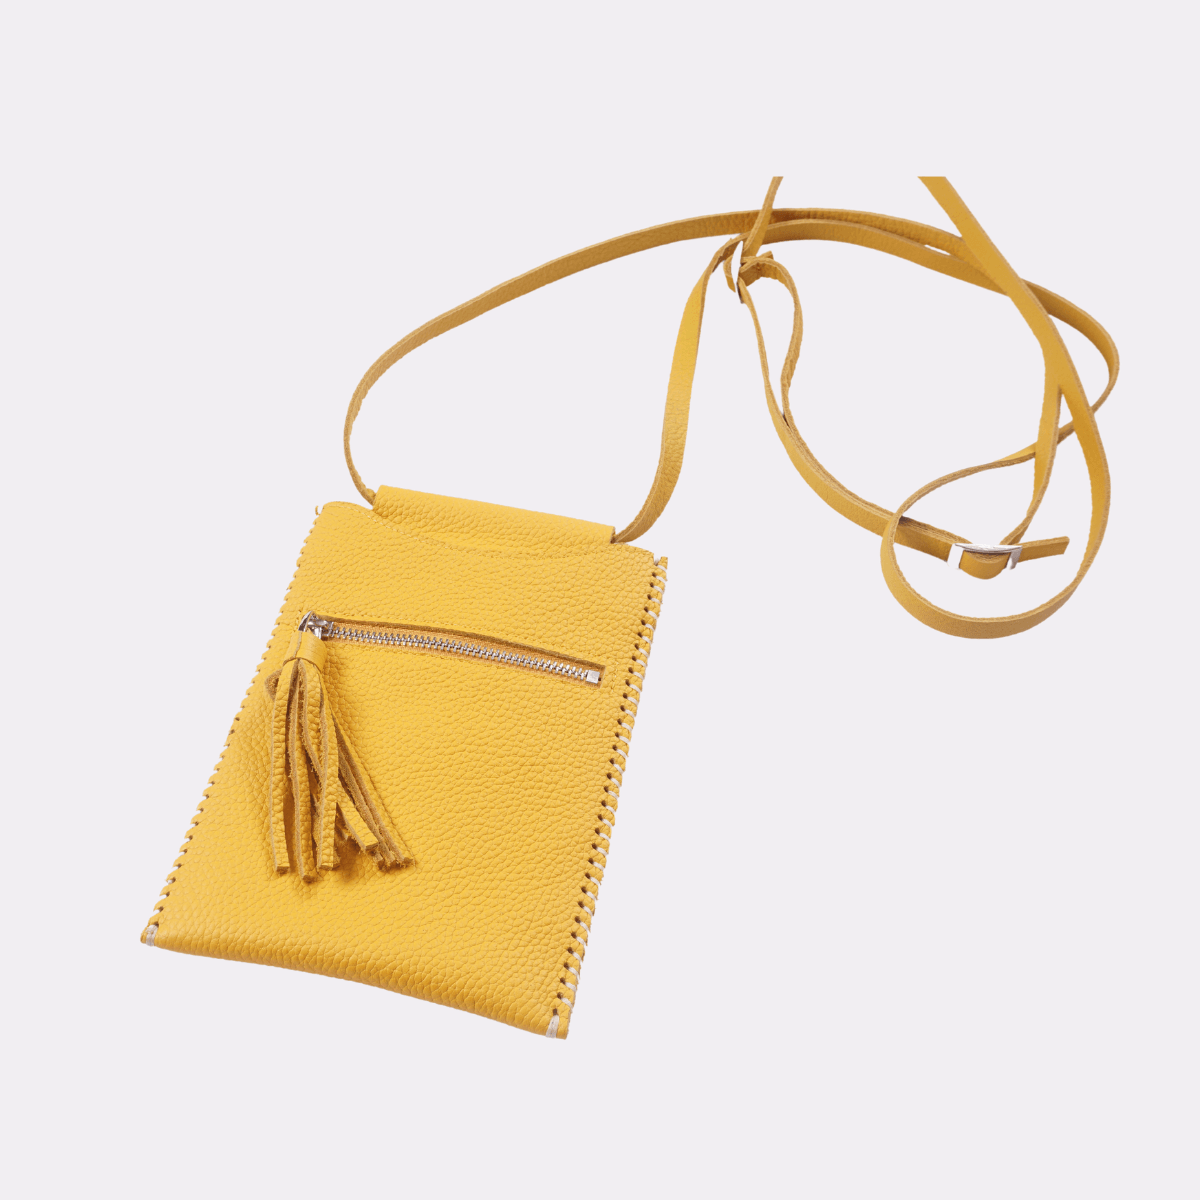 Customizable Genuine Leather Ladies Bag Texra - Yellow